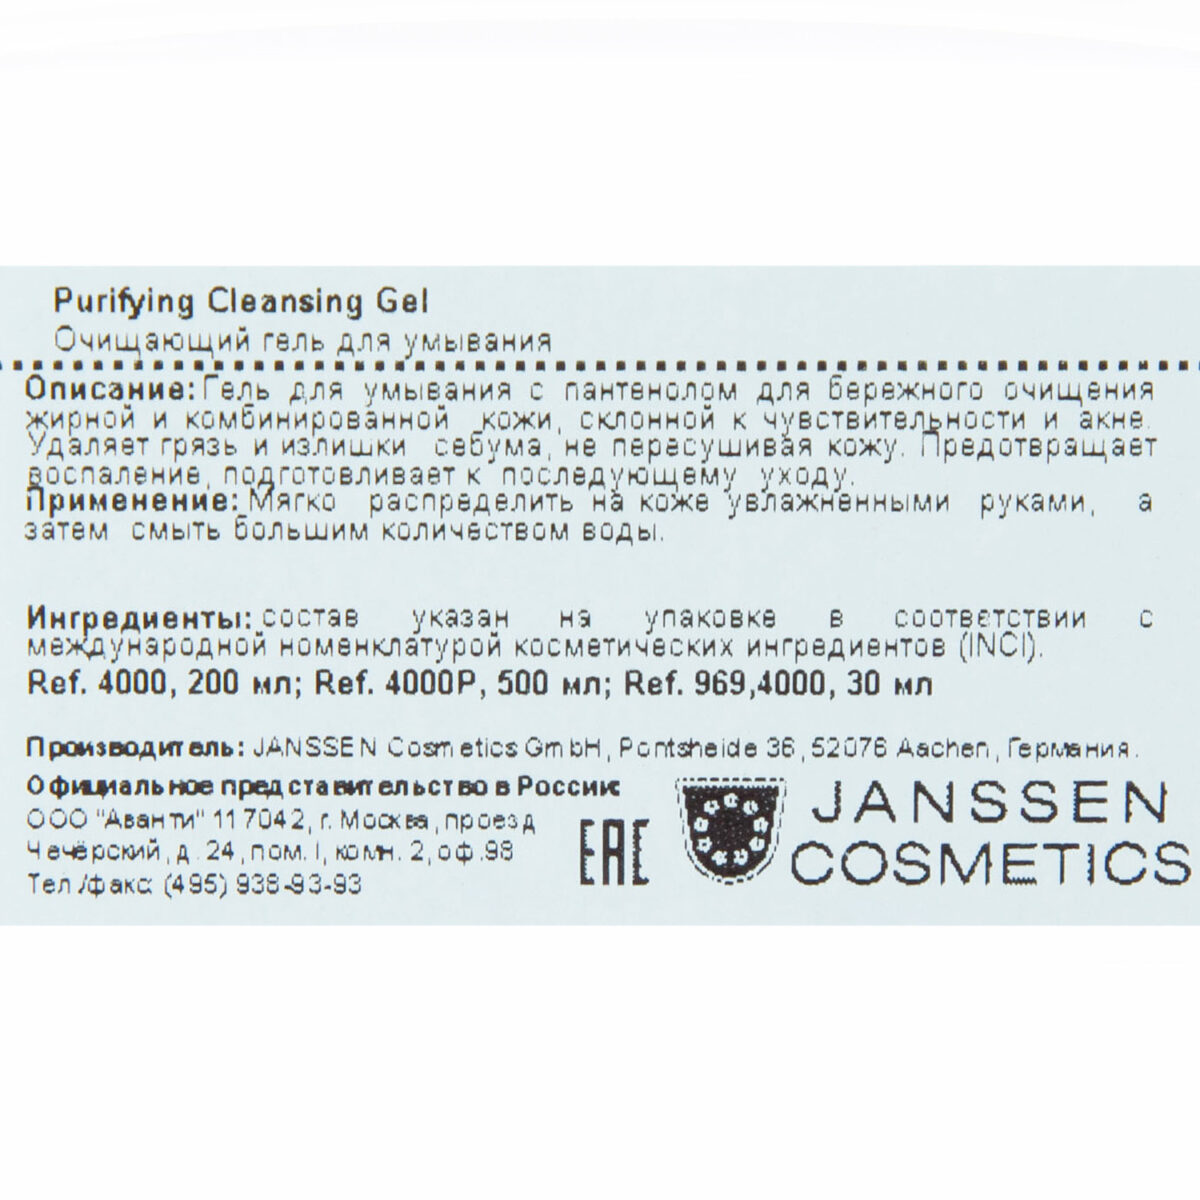 Purifying Cleansing Gel Очищающий гель для умывания 200 мл JANSSEN